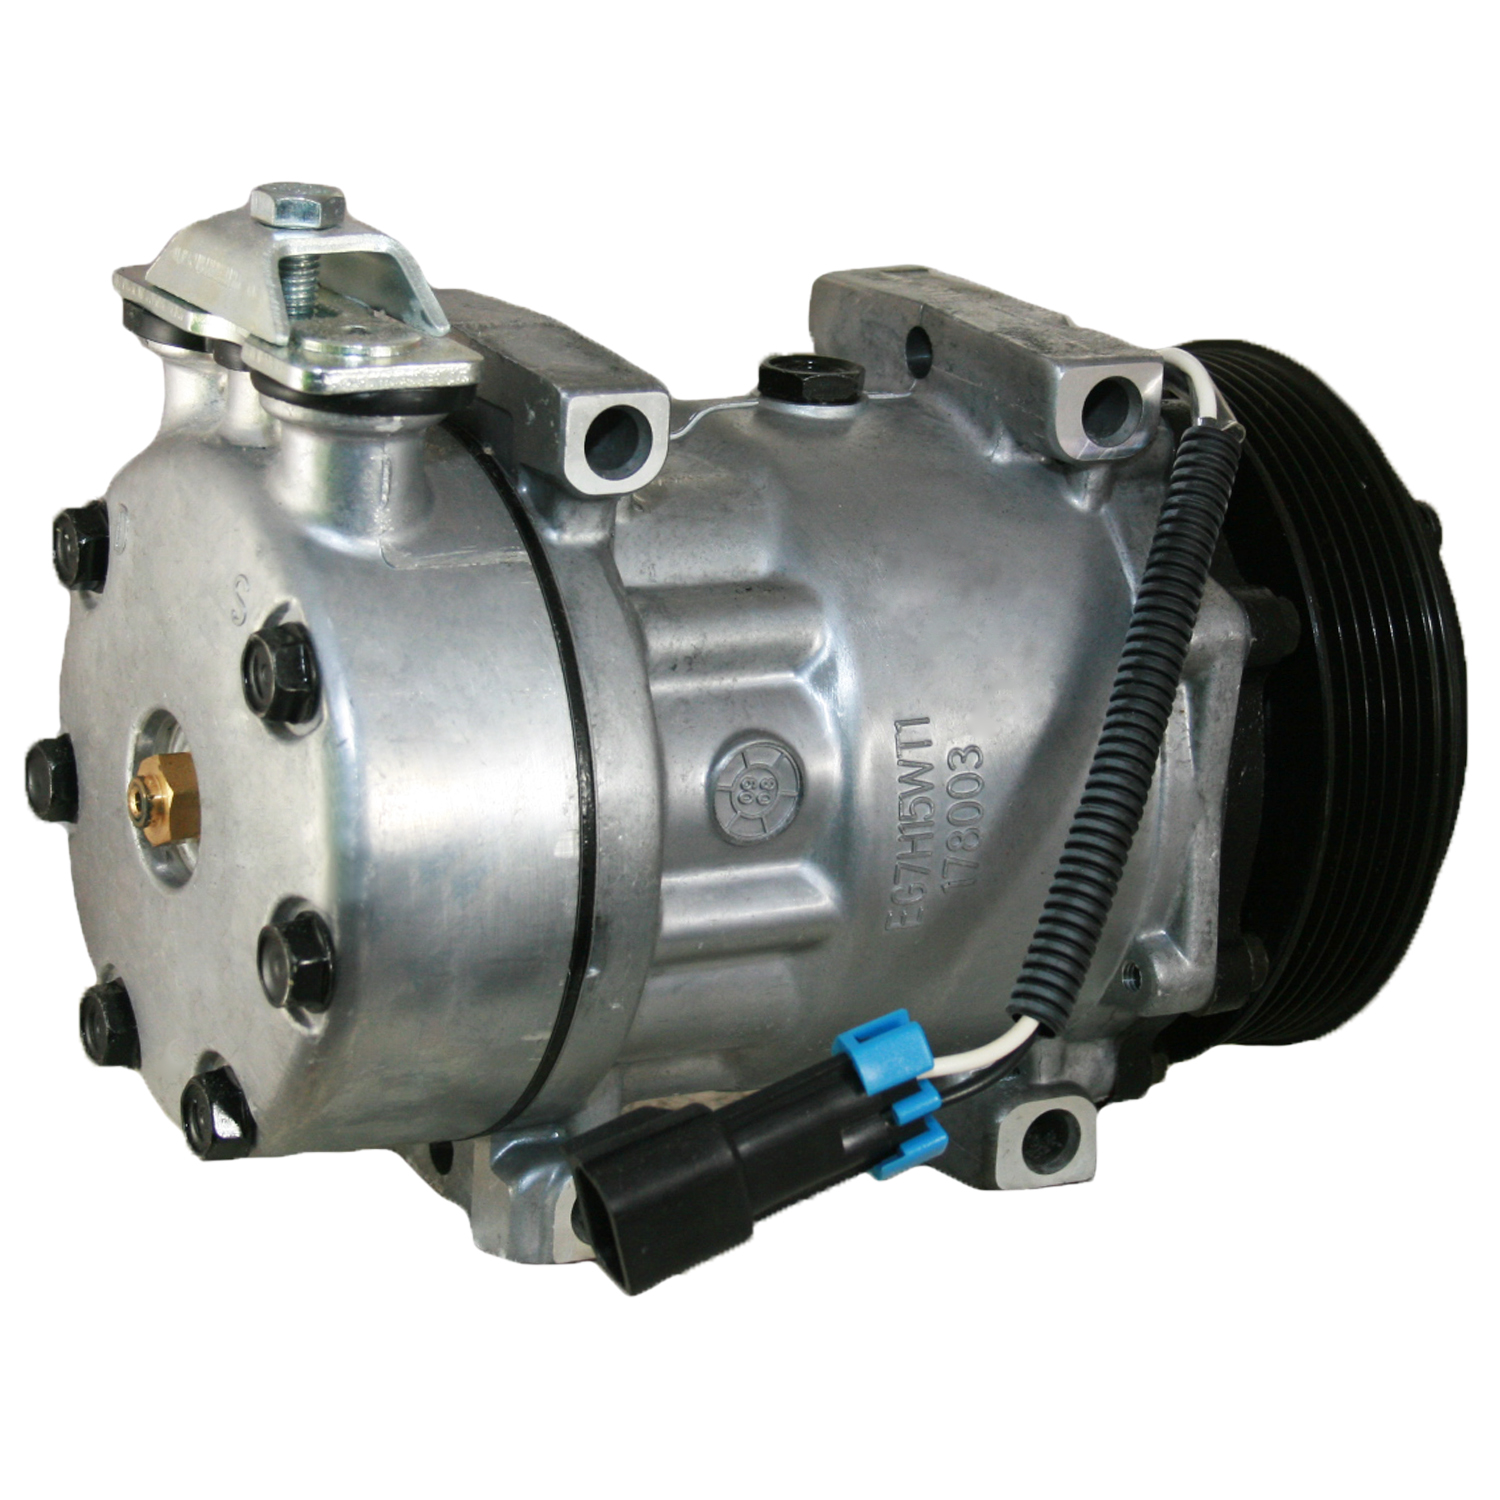 TCW Compressor 40592.601NEW New Product Image field_60b6a13a6e67c